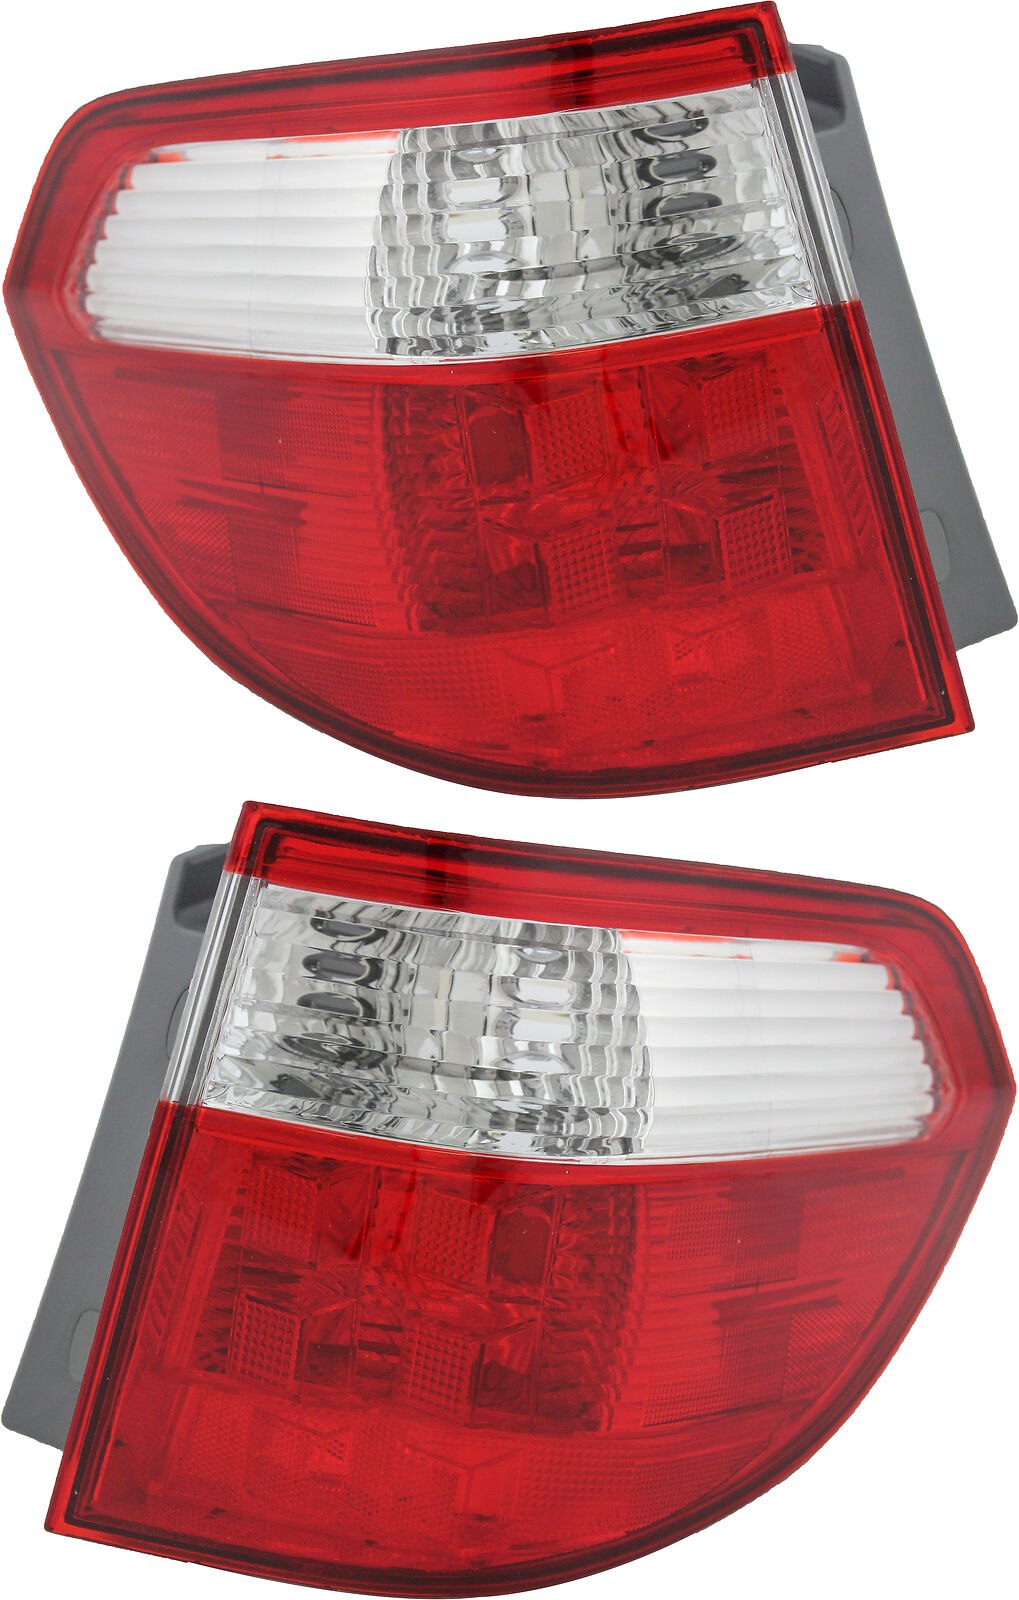 For 2005-2007 Honda Odyssey Tail Light Set Driver and Passenger Side